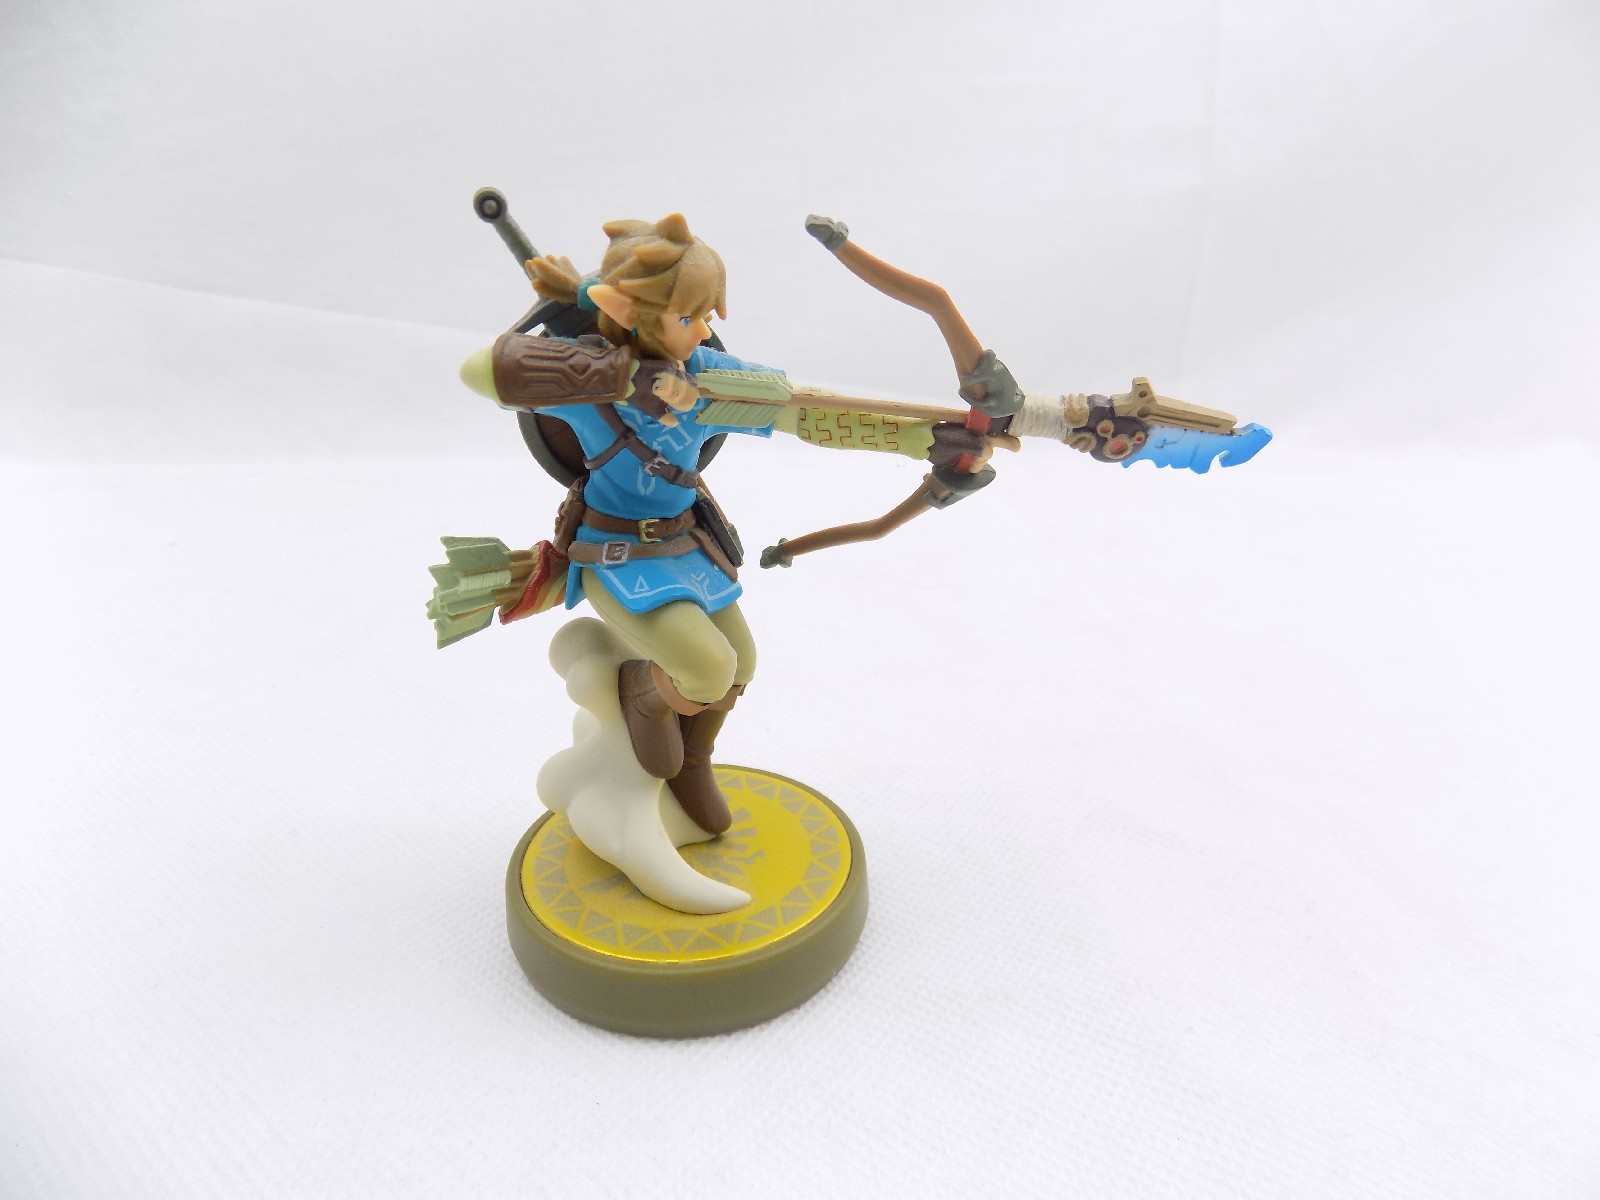 Nintendo Amiibo La Légende de Zelda Figurine Link Archer